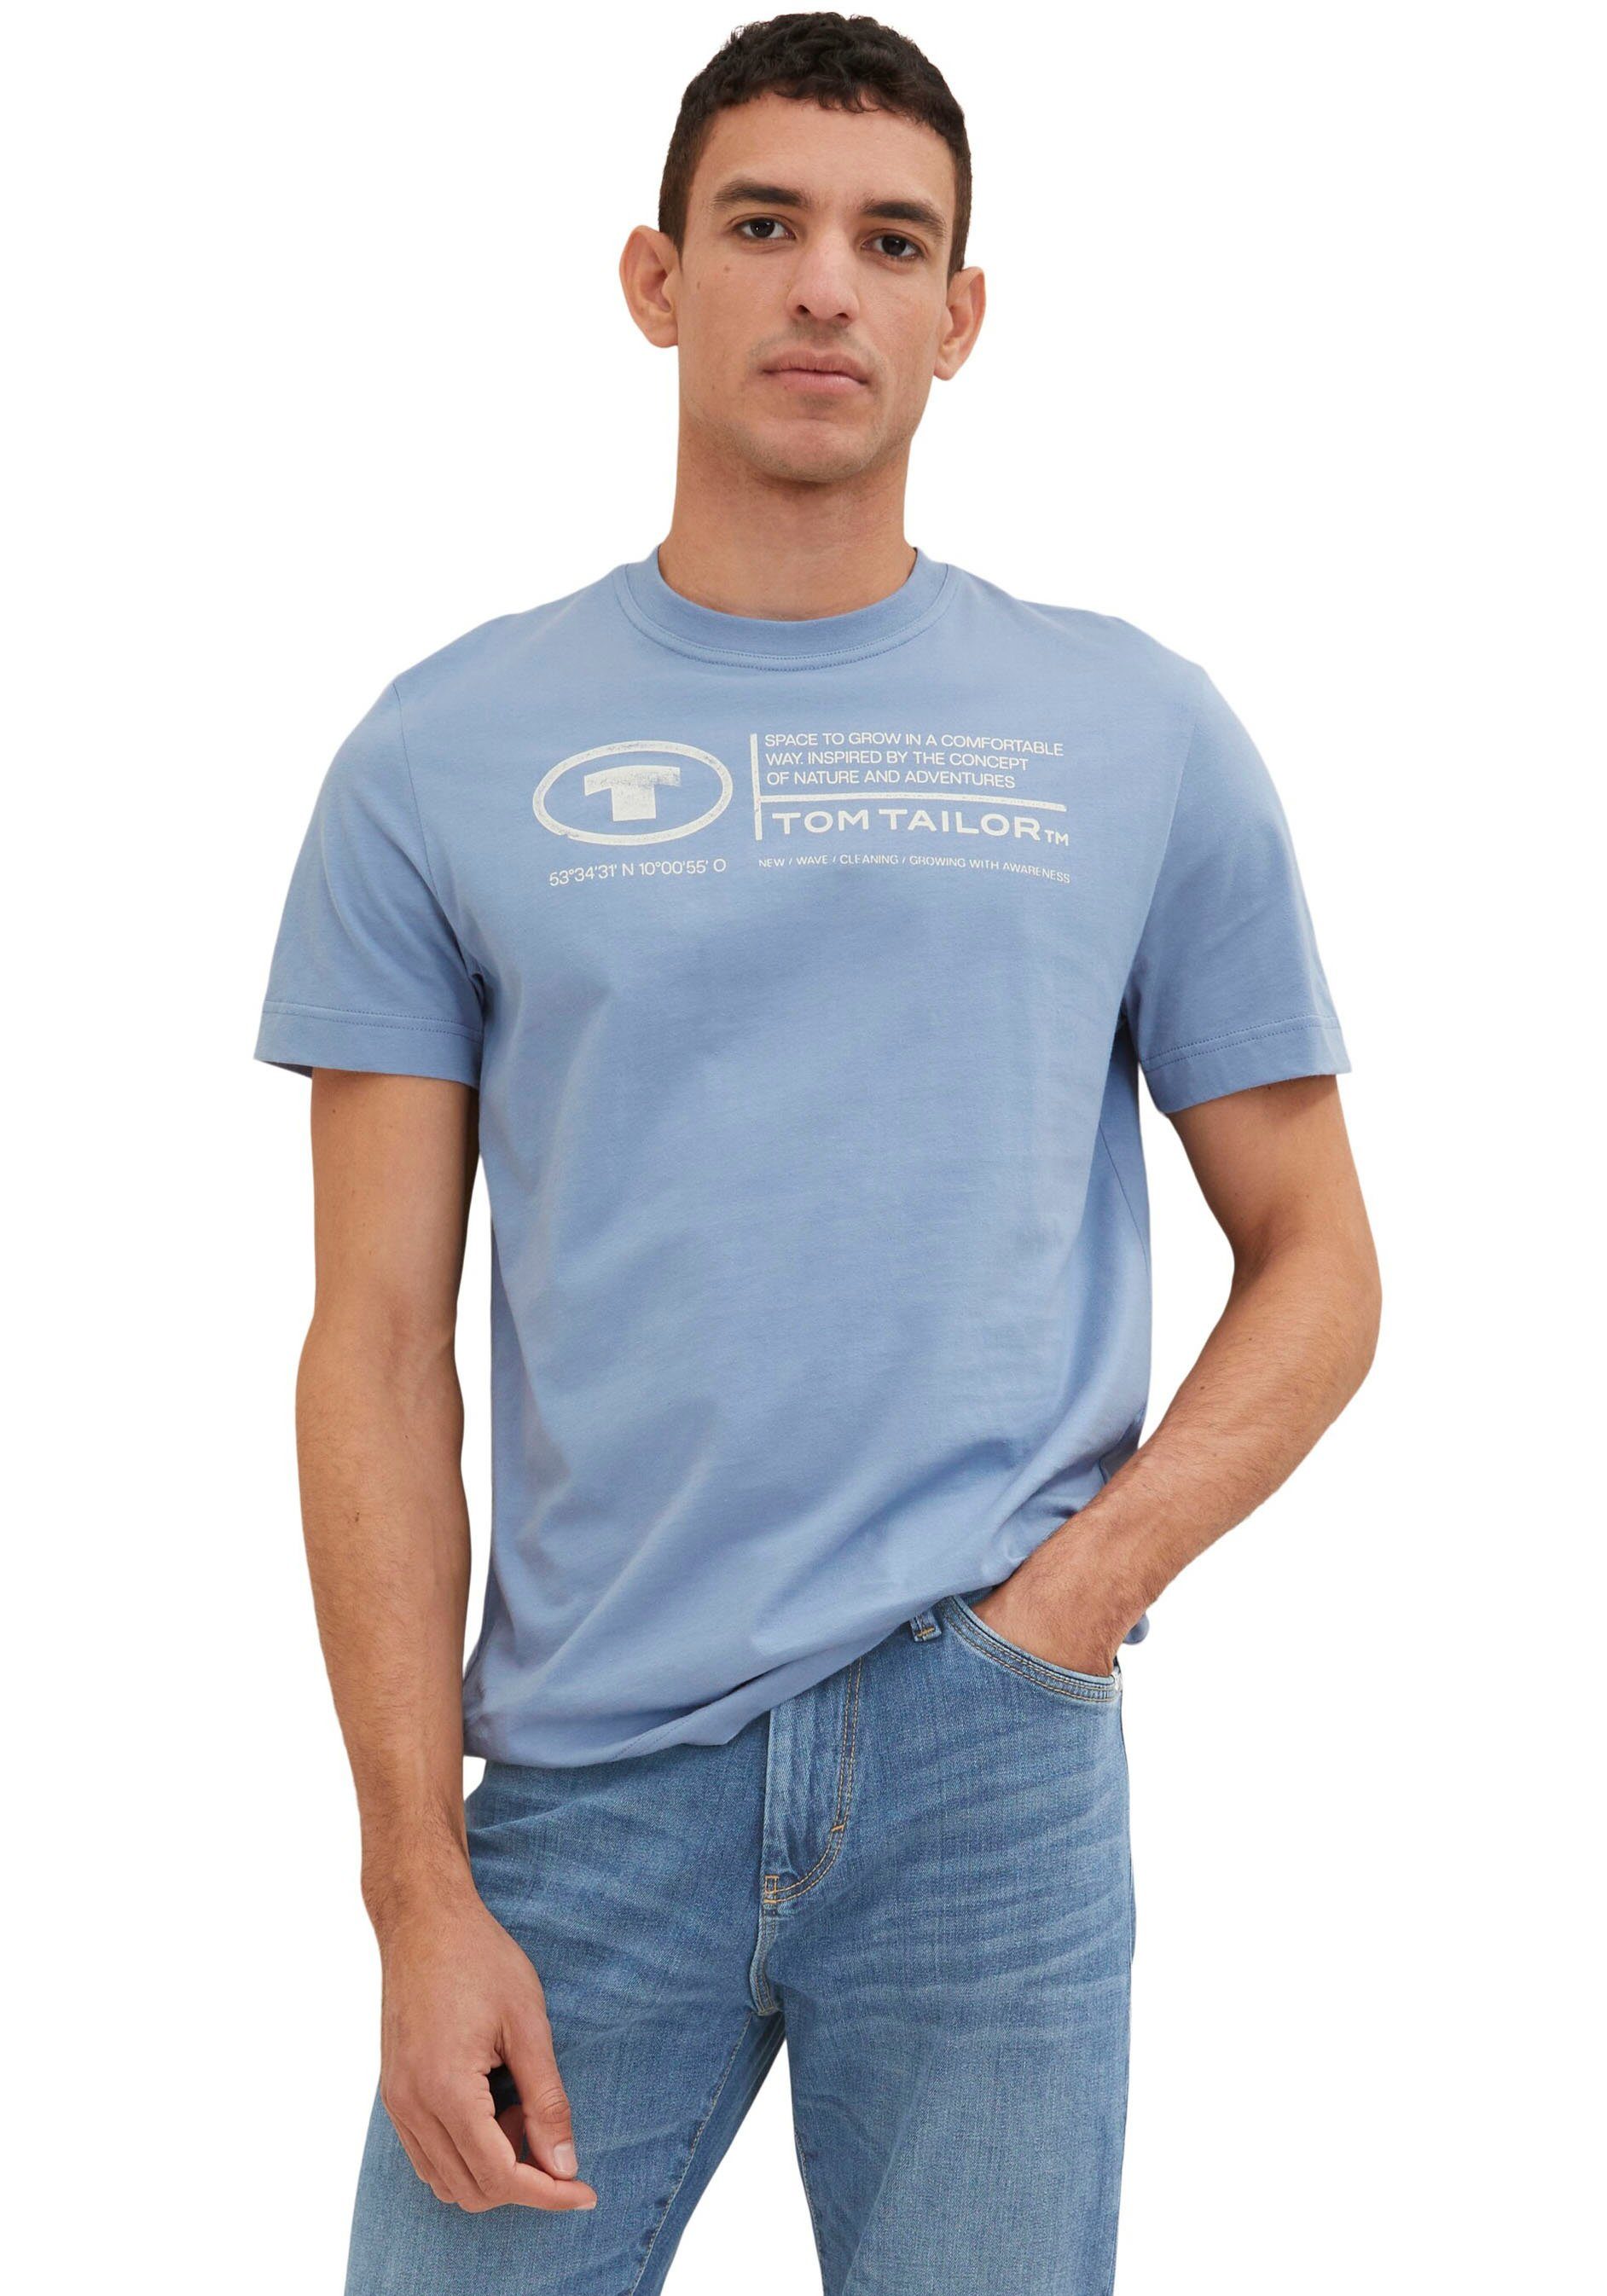 TOM TAILOR Print-Shirt Tailor Tom Greyish Blue T-Shirt Frontprint Mid Herren